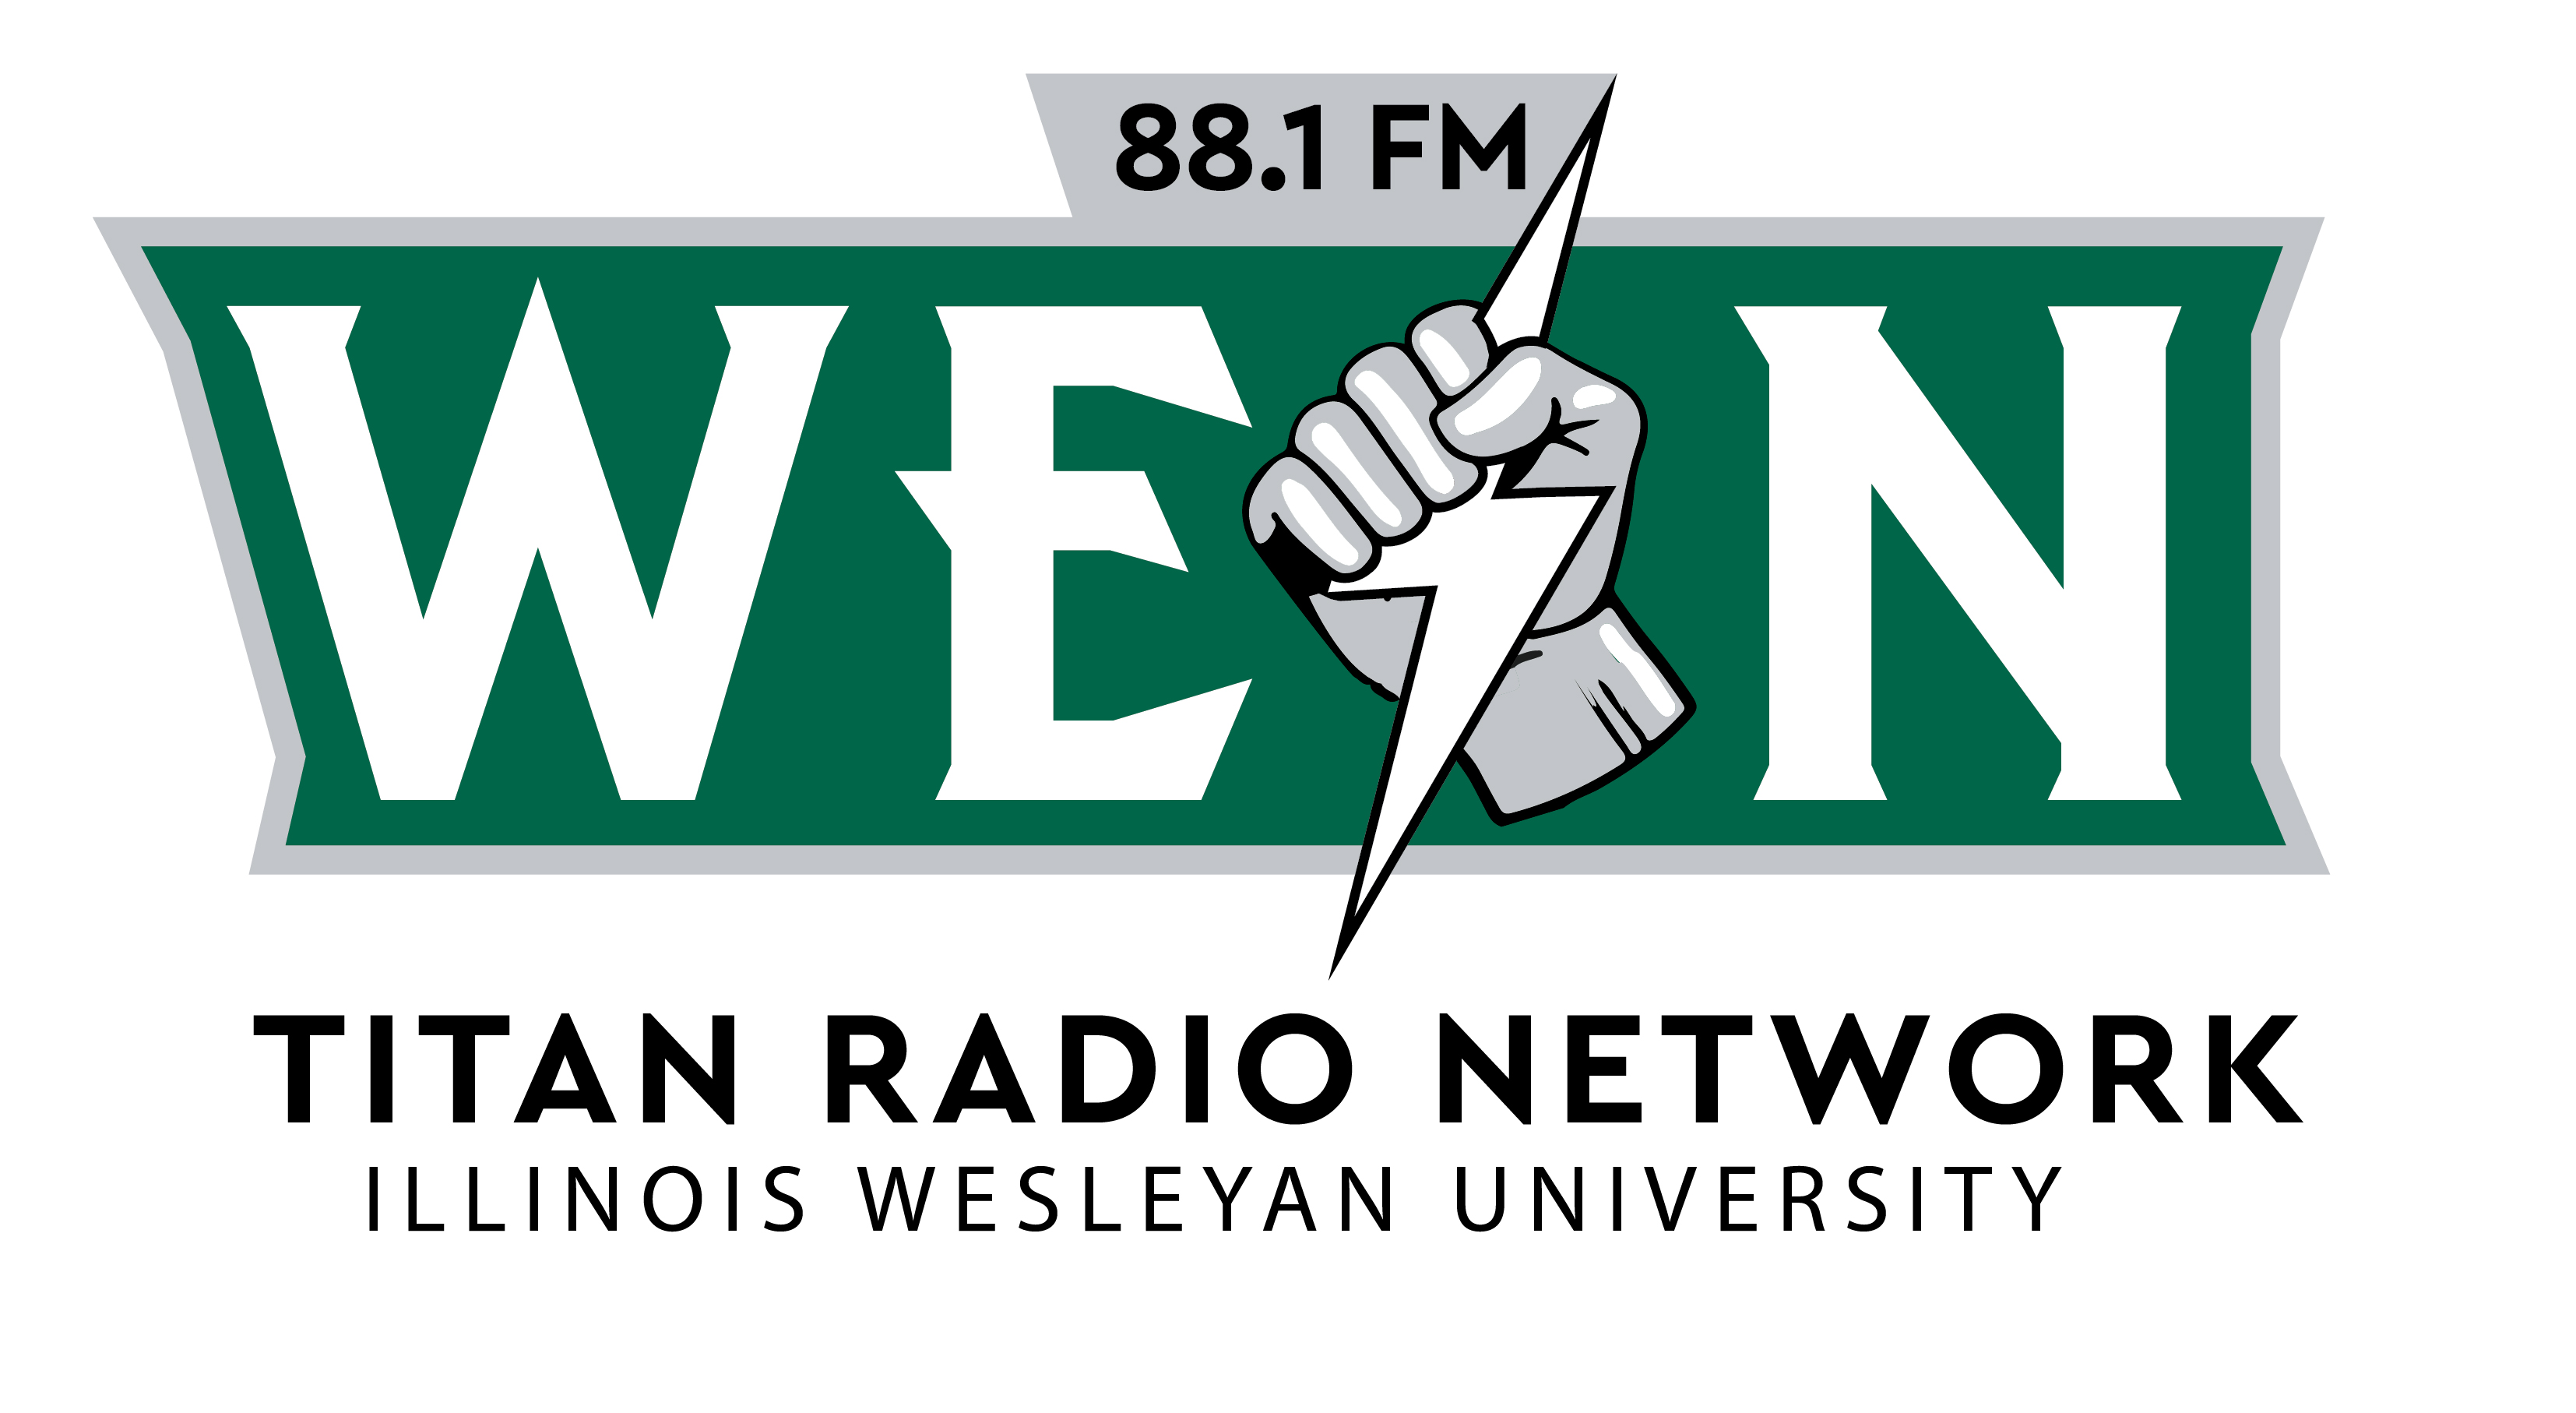 WESN 88.1 FM Logo